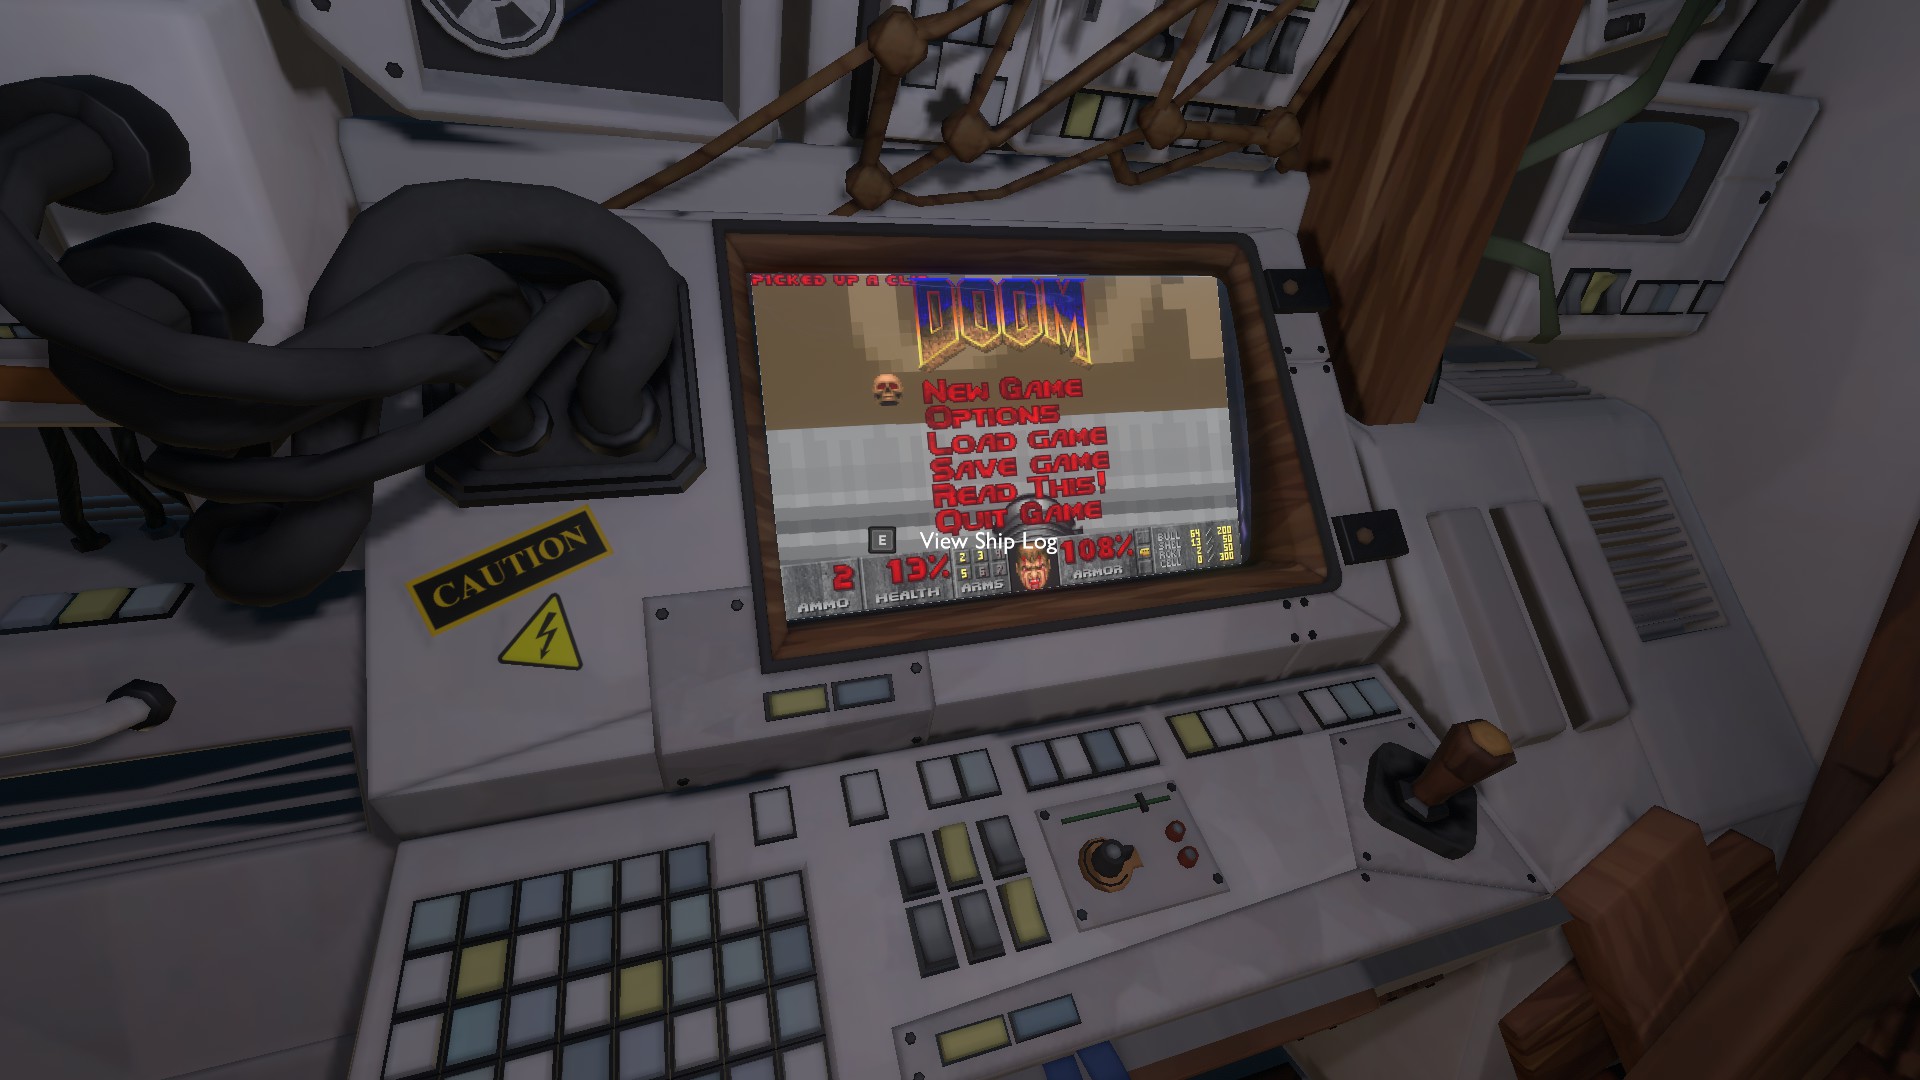 A screenshot of DOOM on the ship computer